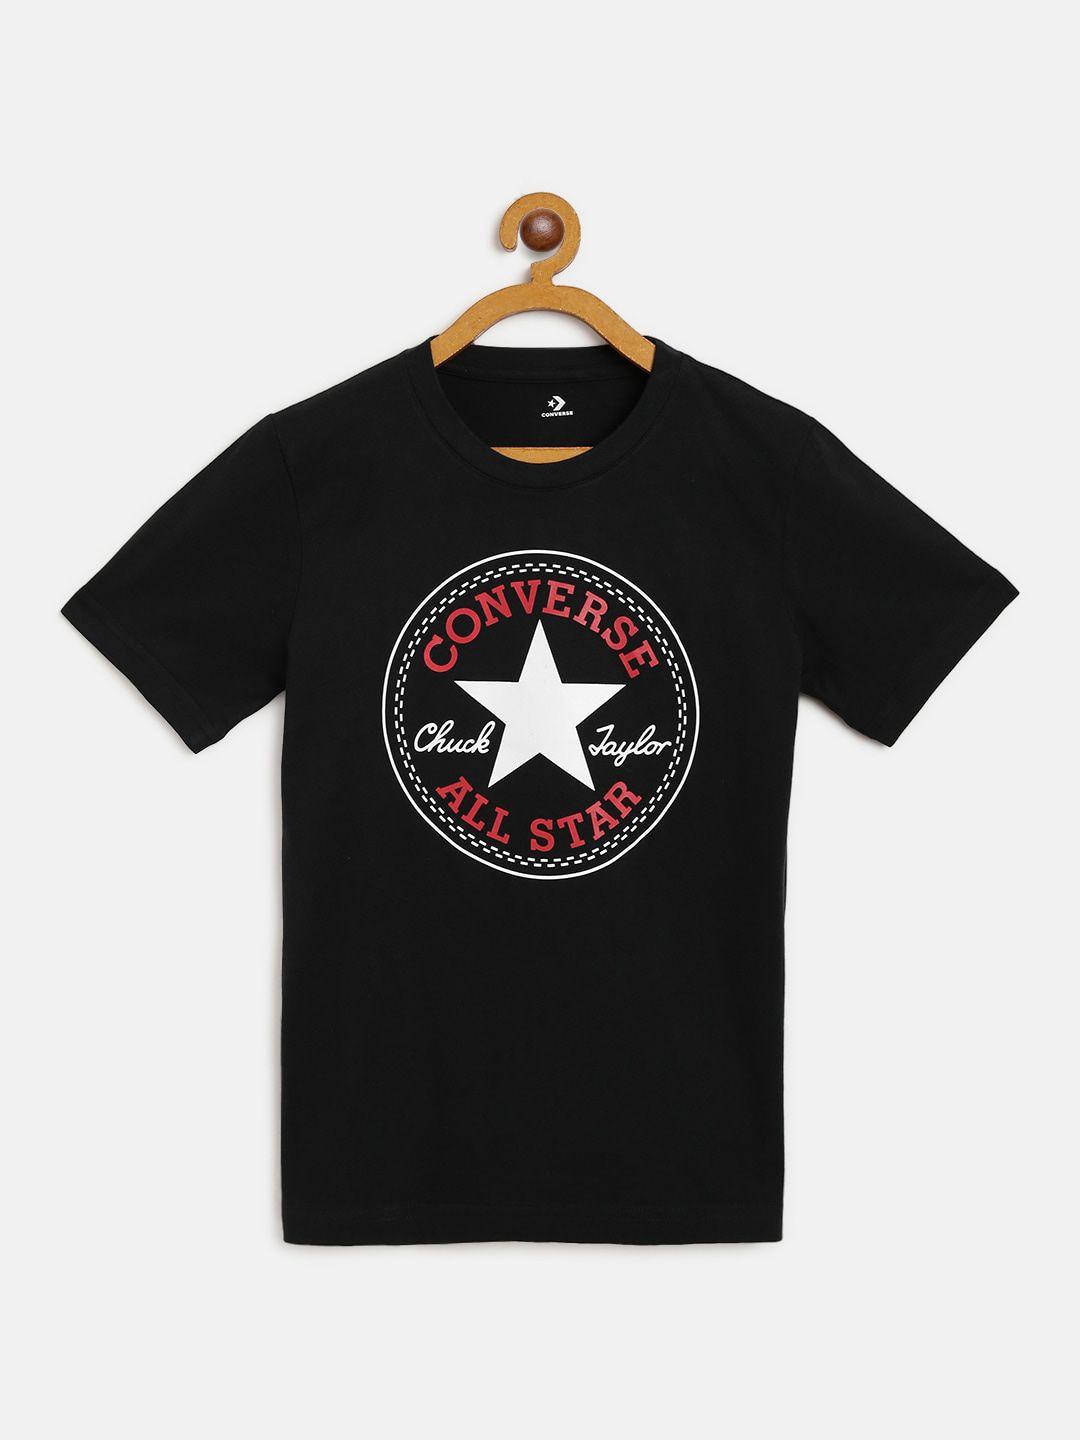 Converse Boys Black & White Brand Logo Print Round Neck T-shirt